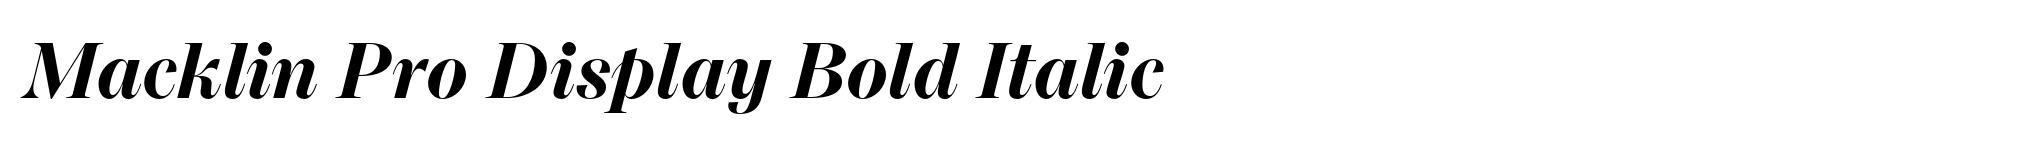 Macklin Pro Display Bold Italic image